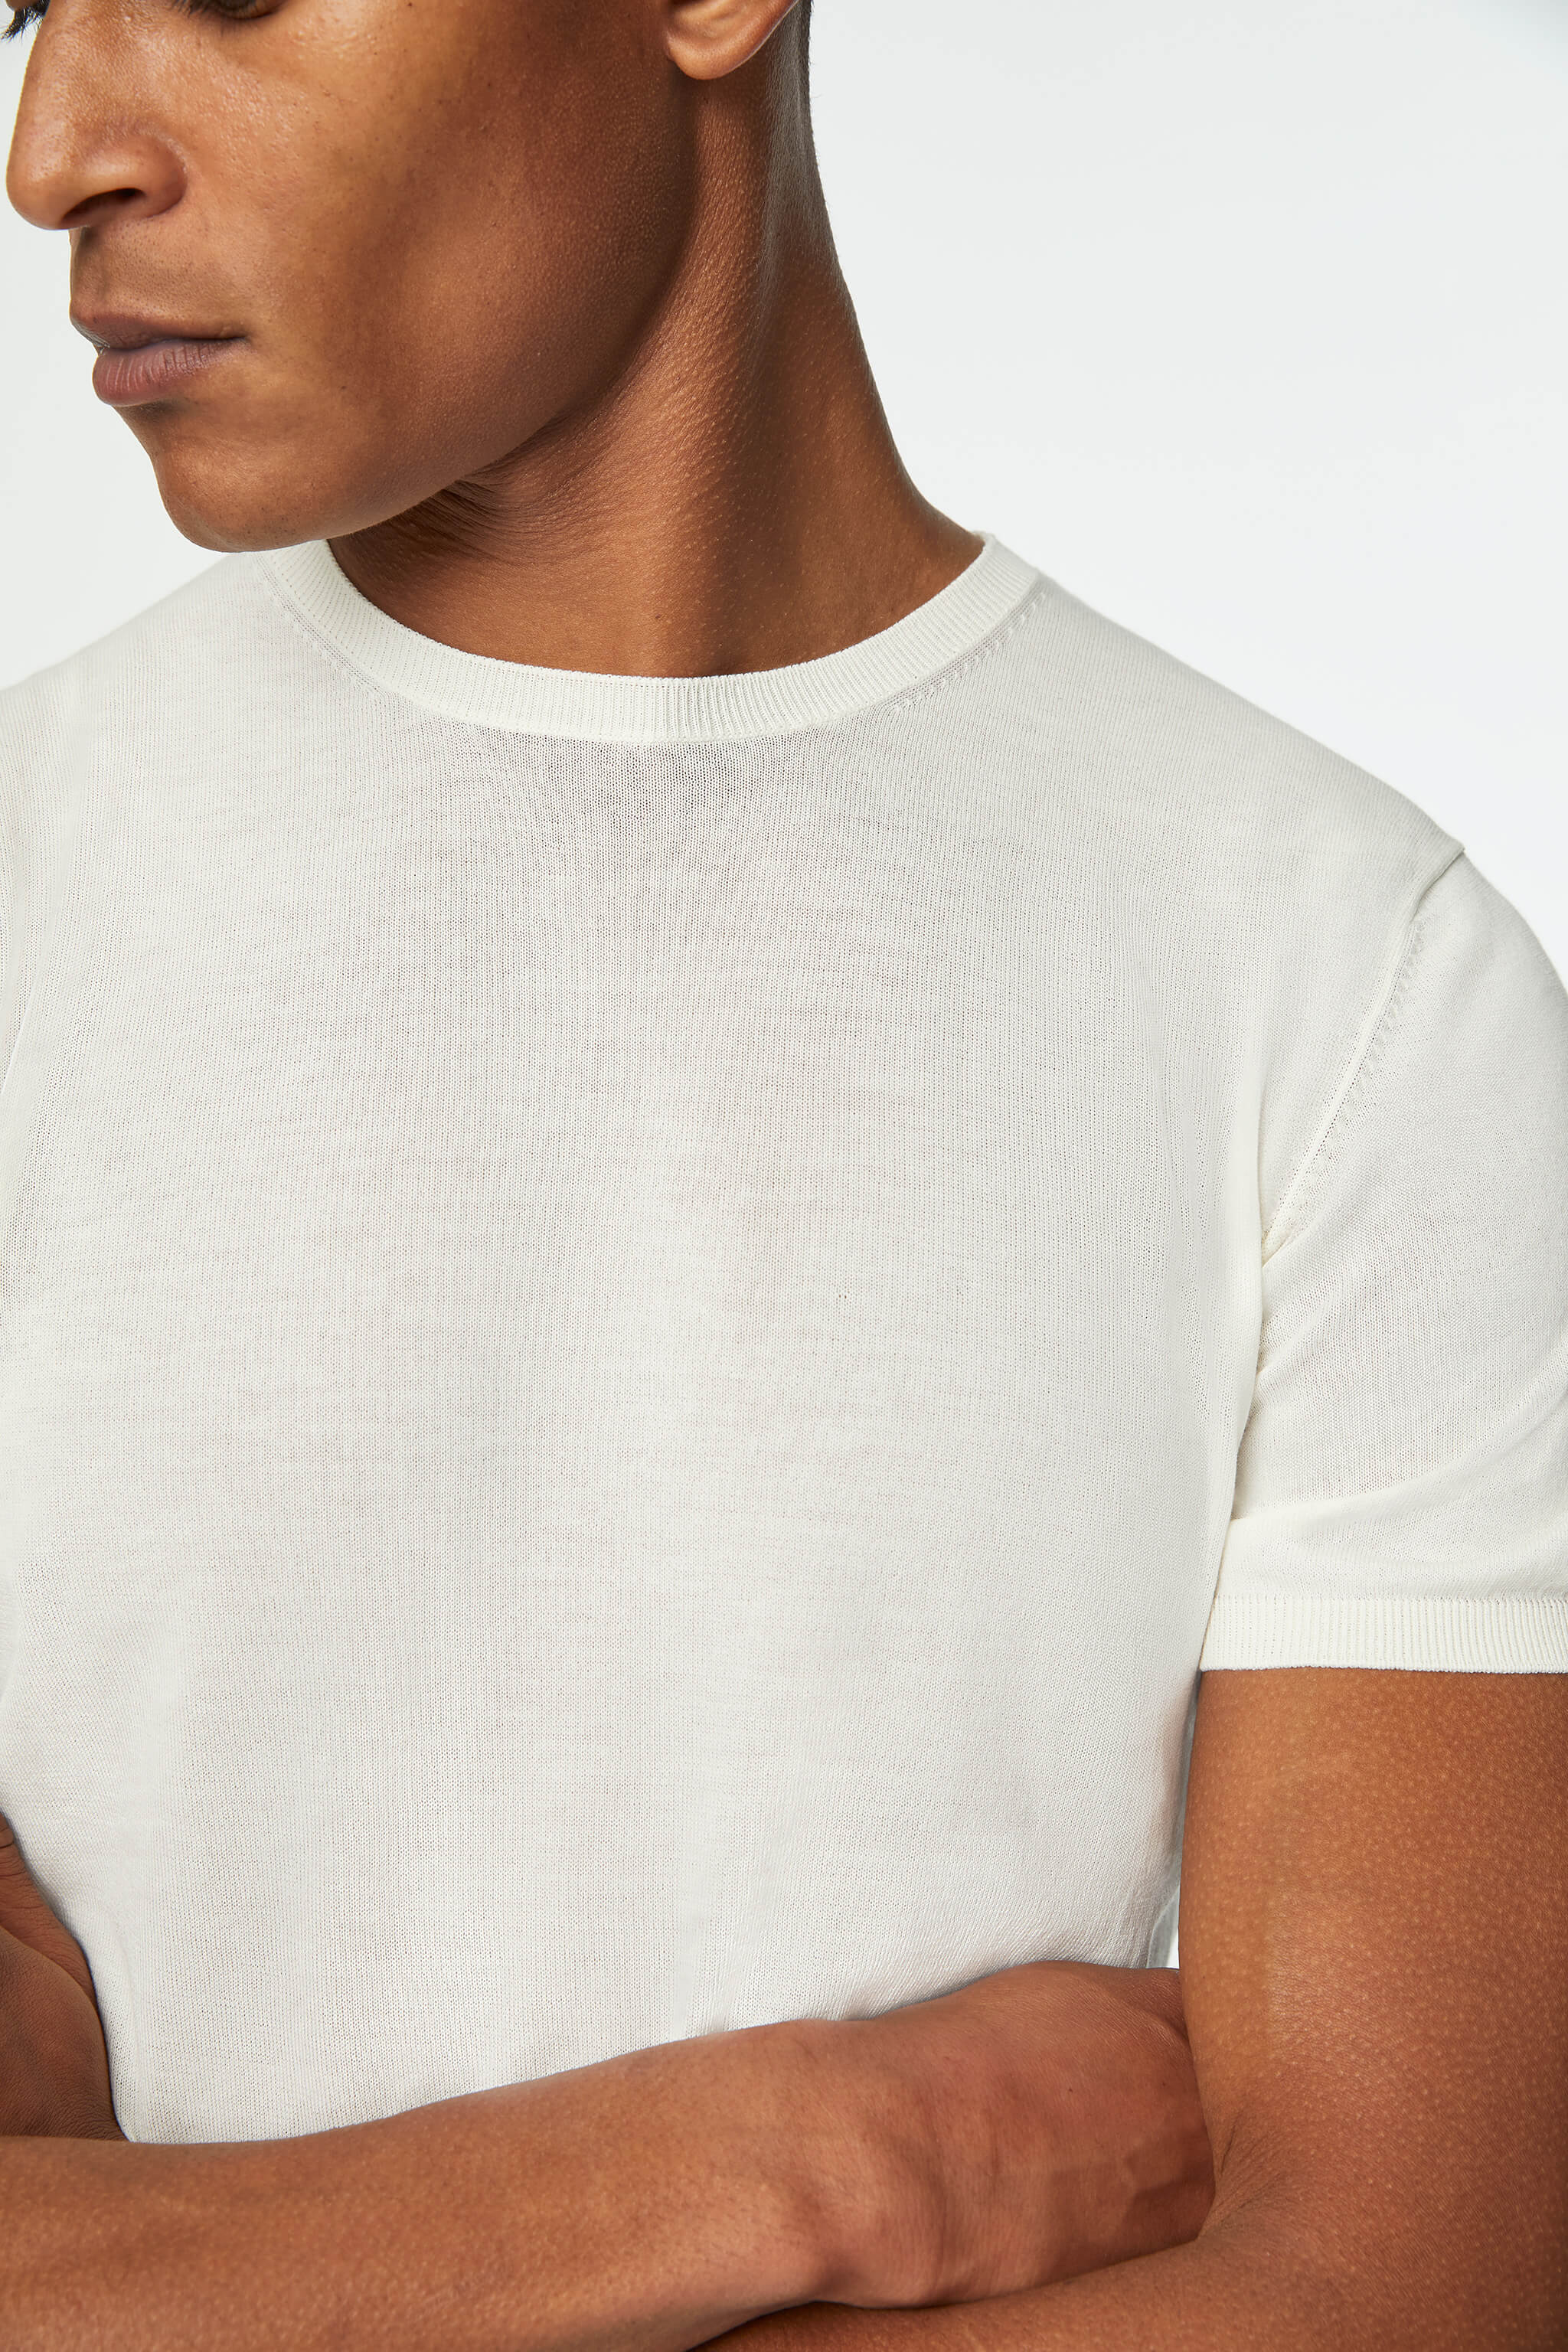 Short-sleeved shirt in White cotton